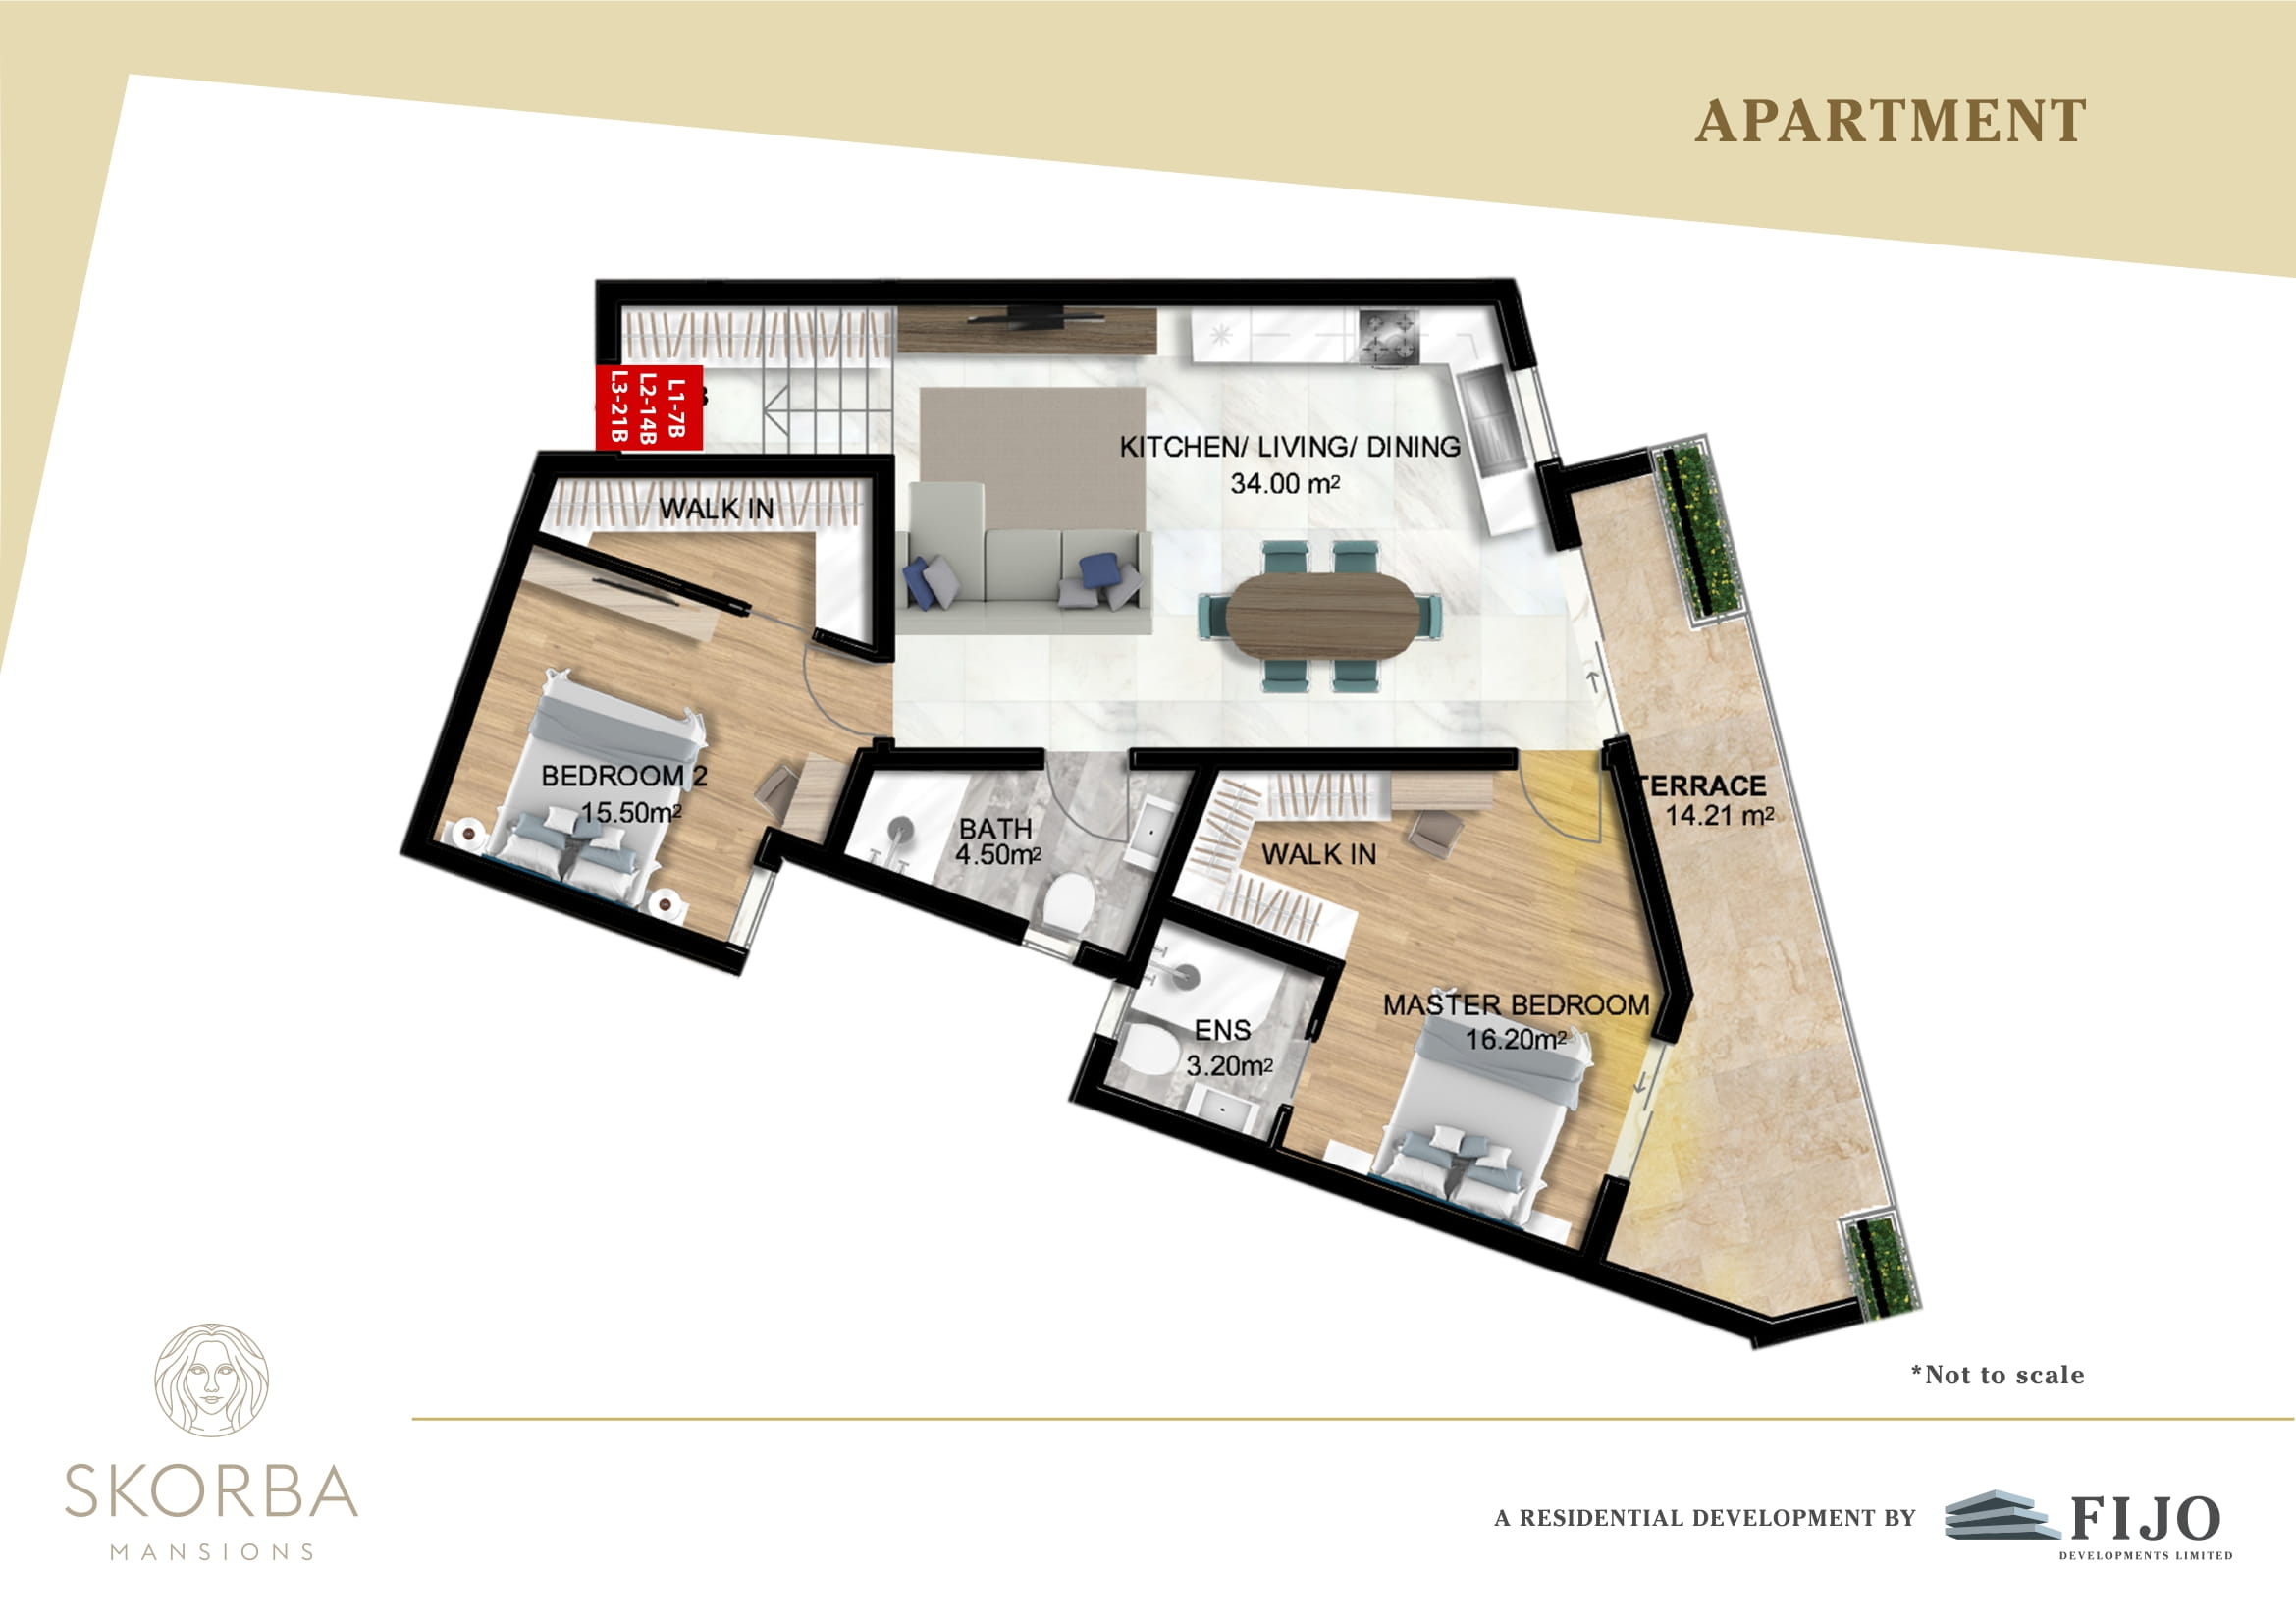 Skorba Mansions Plans LEVEL 1,2,3 APARTMENT 7B-1